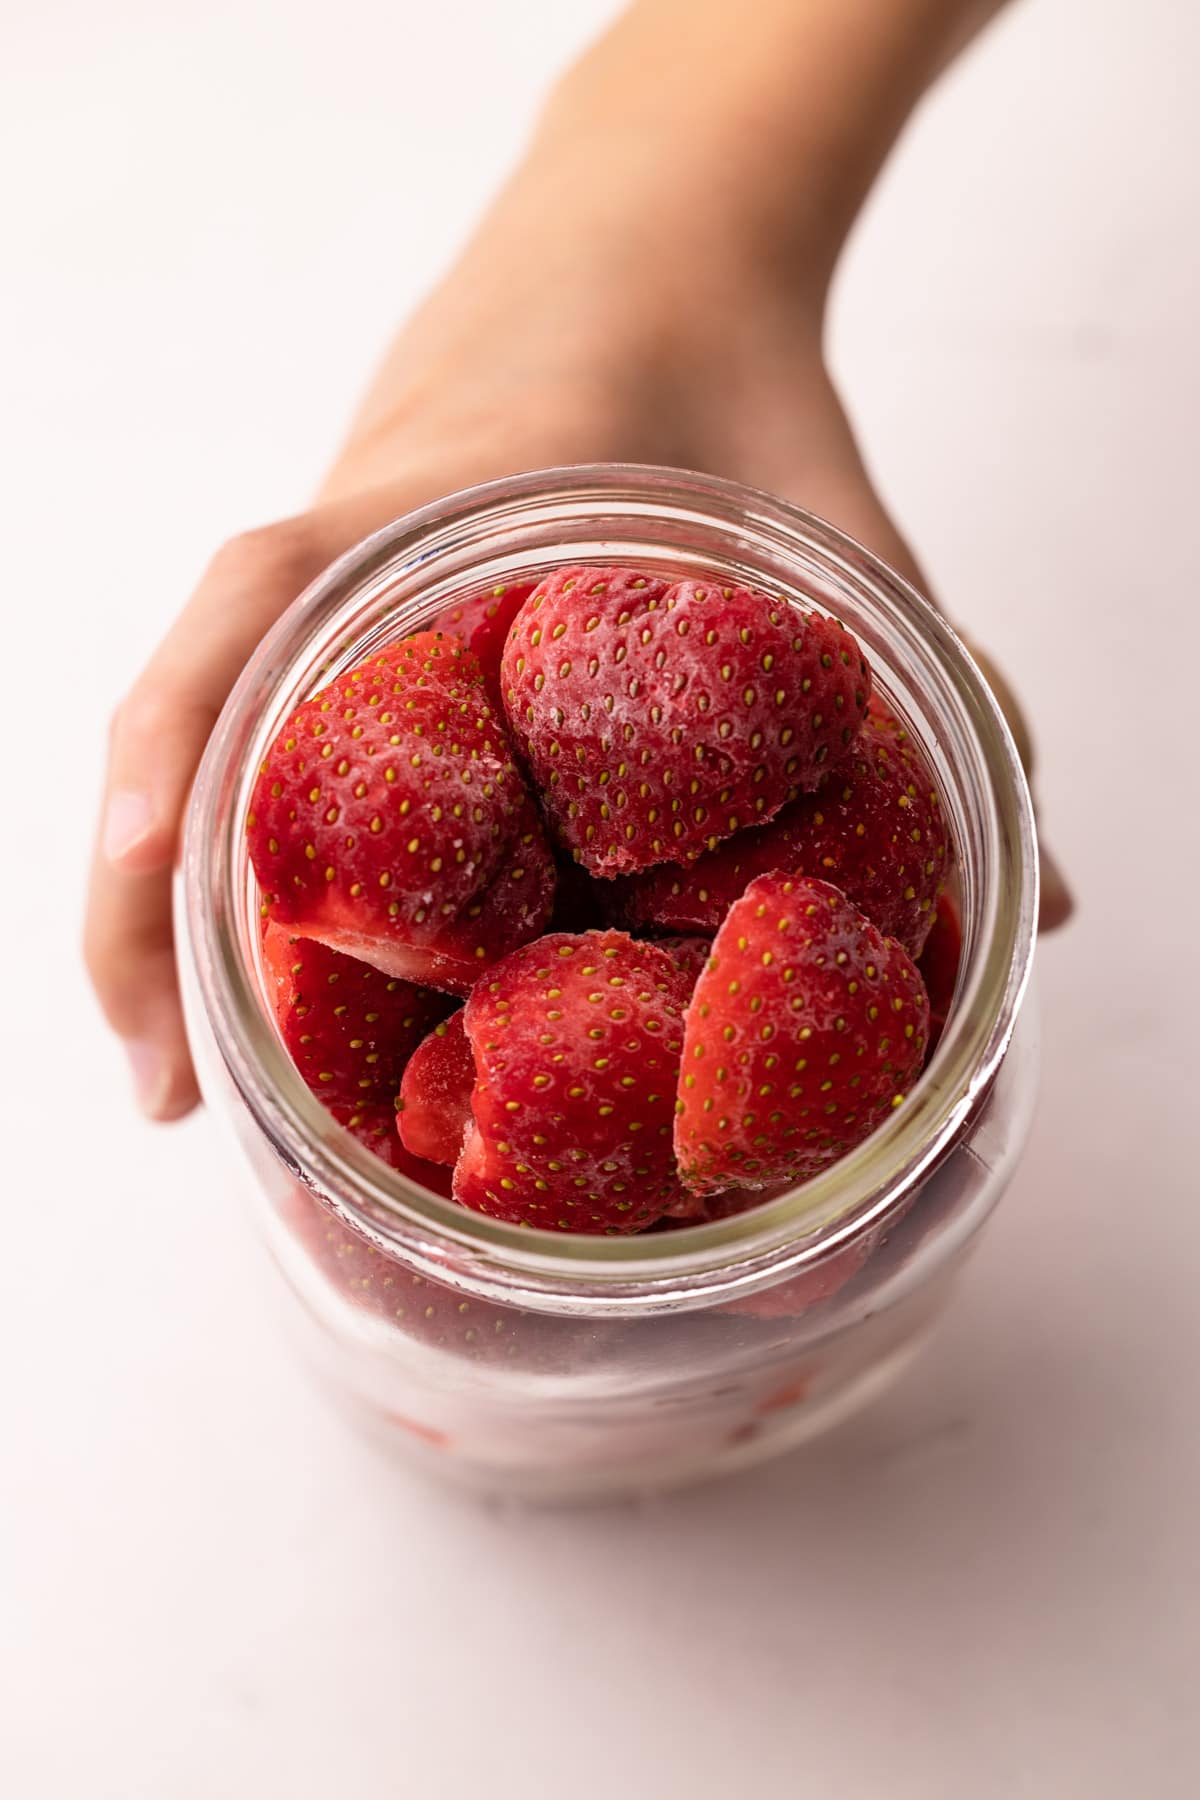 A jar of frozen strawberries.